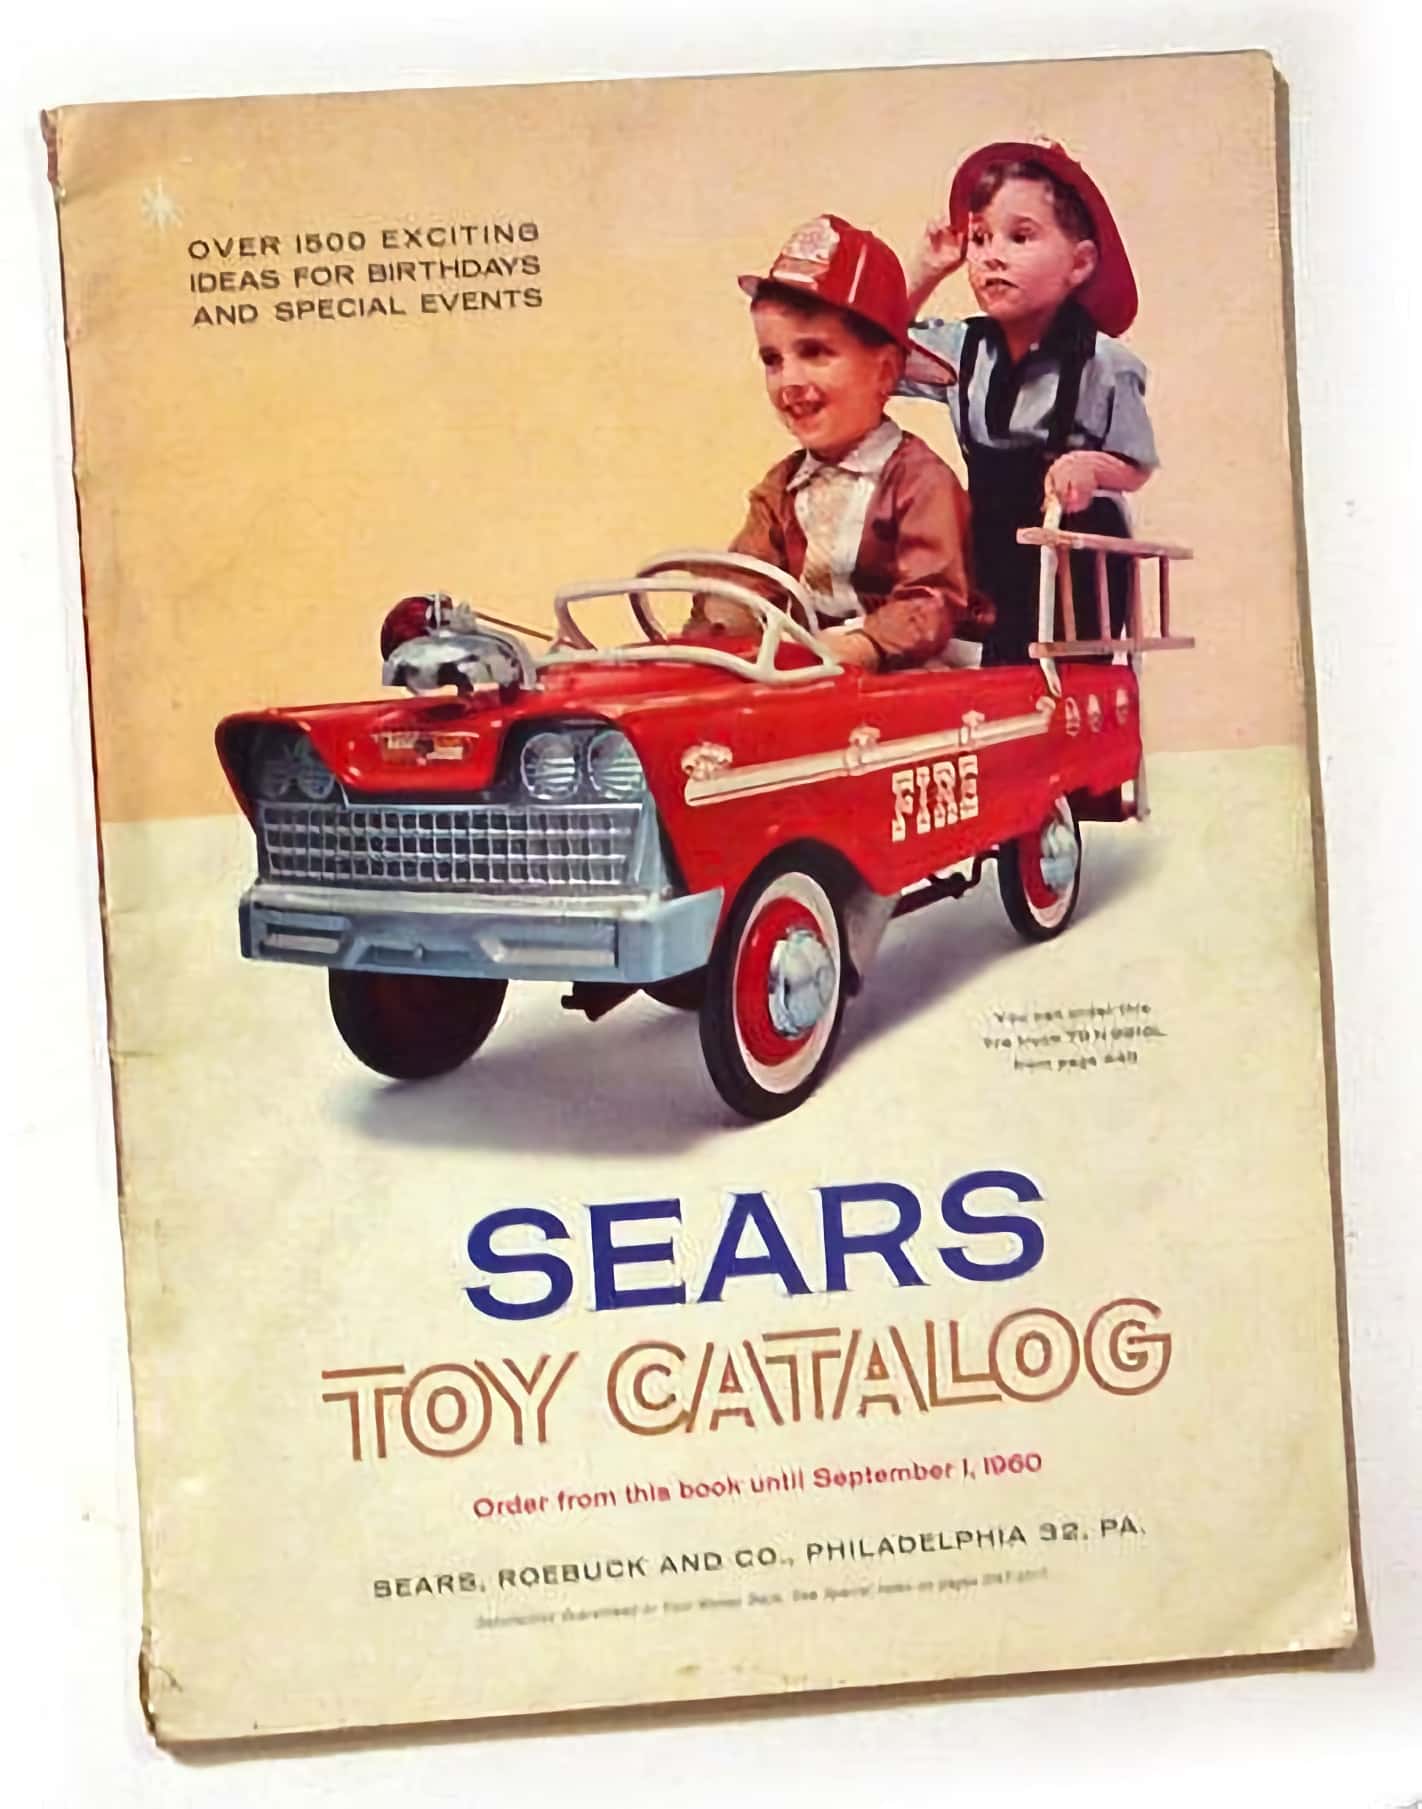 Sears toy catalog